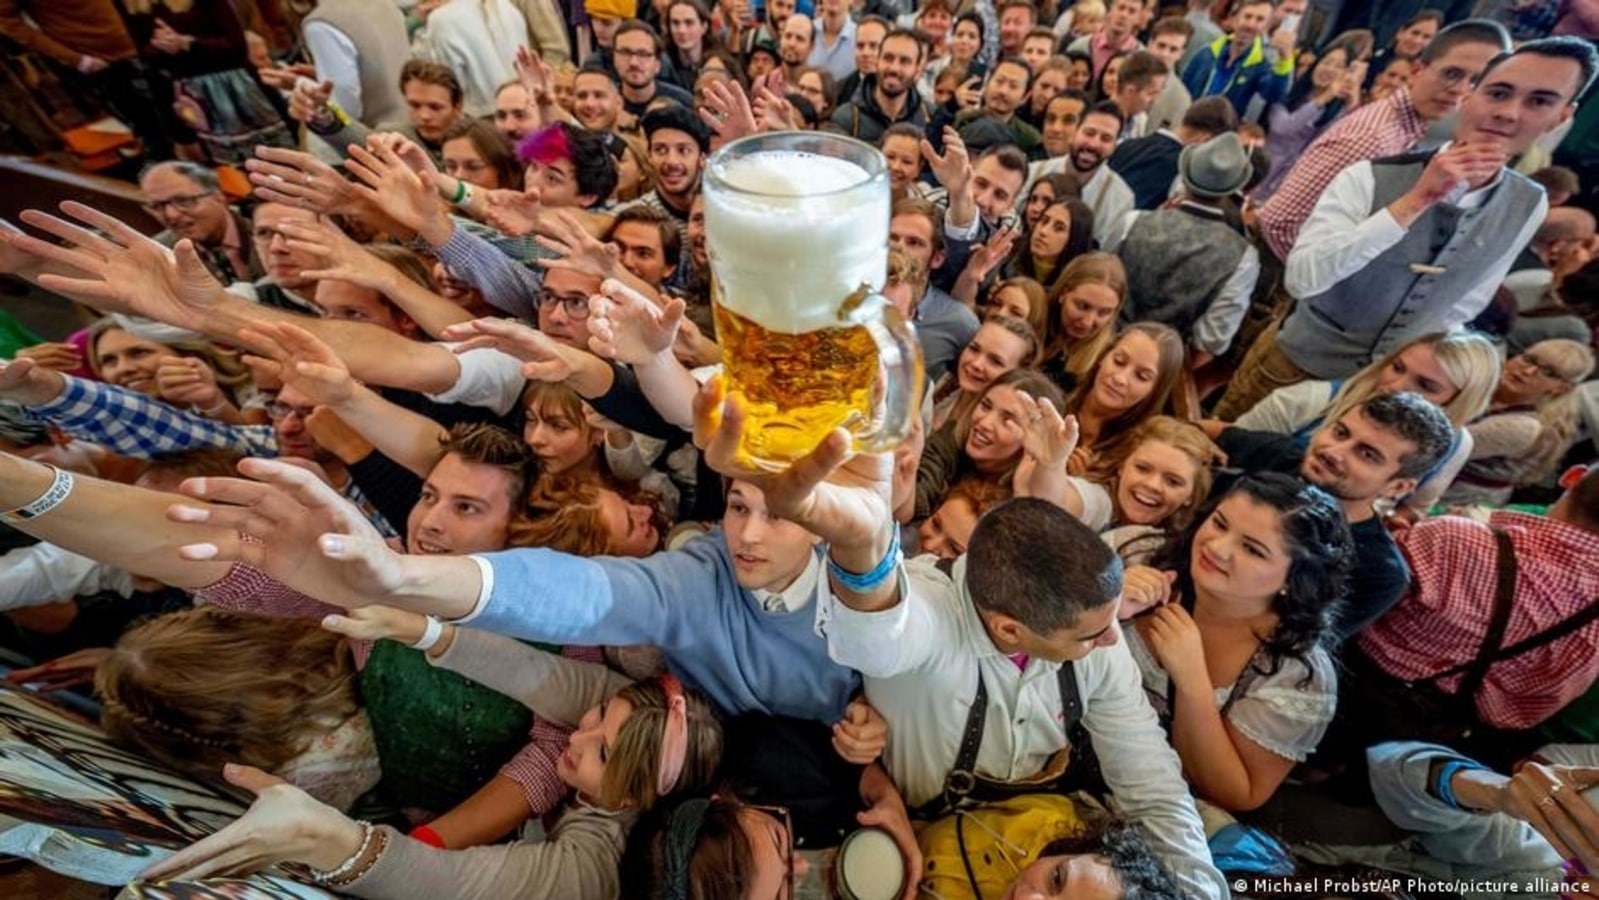 Oktoberfest kicks off in Munich after 2-year break | Travel - Hindustan Times